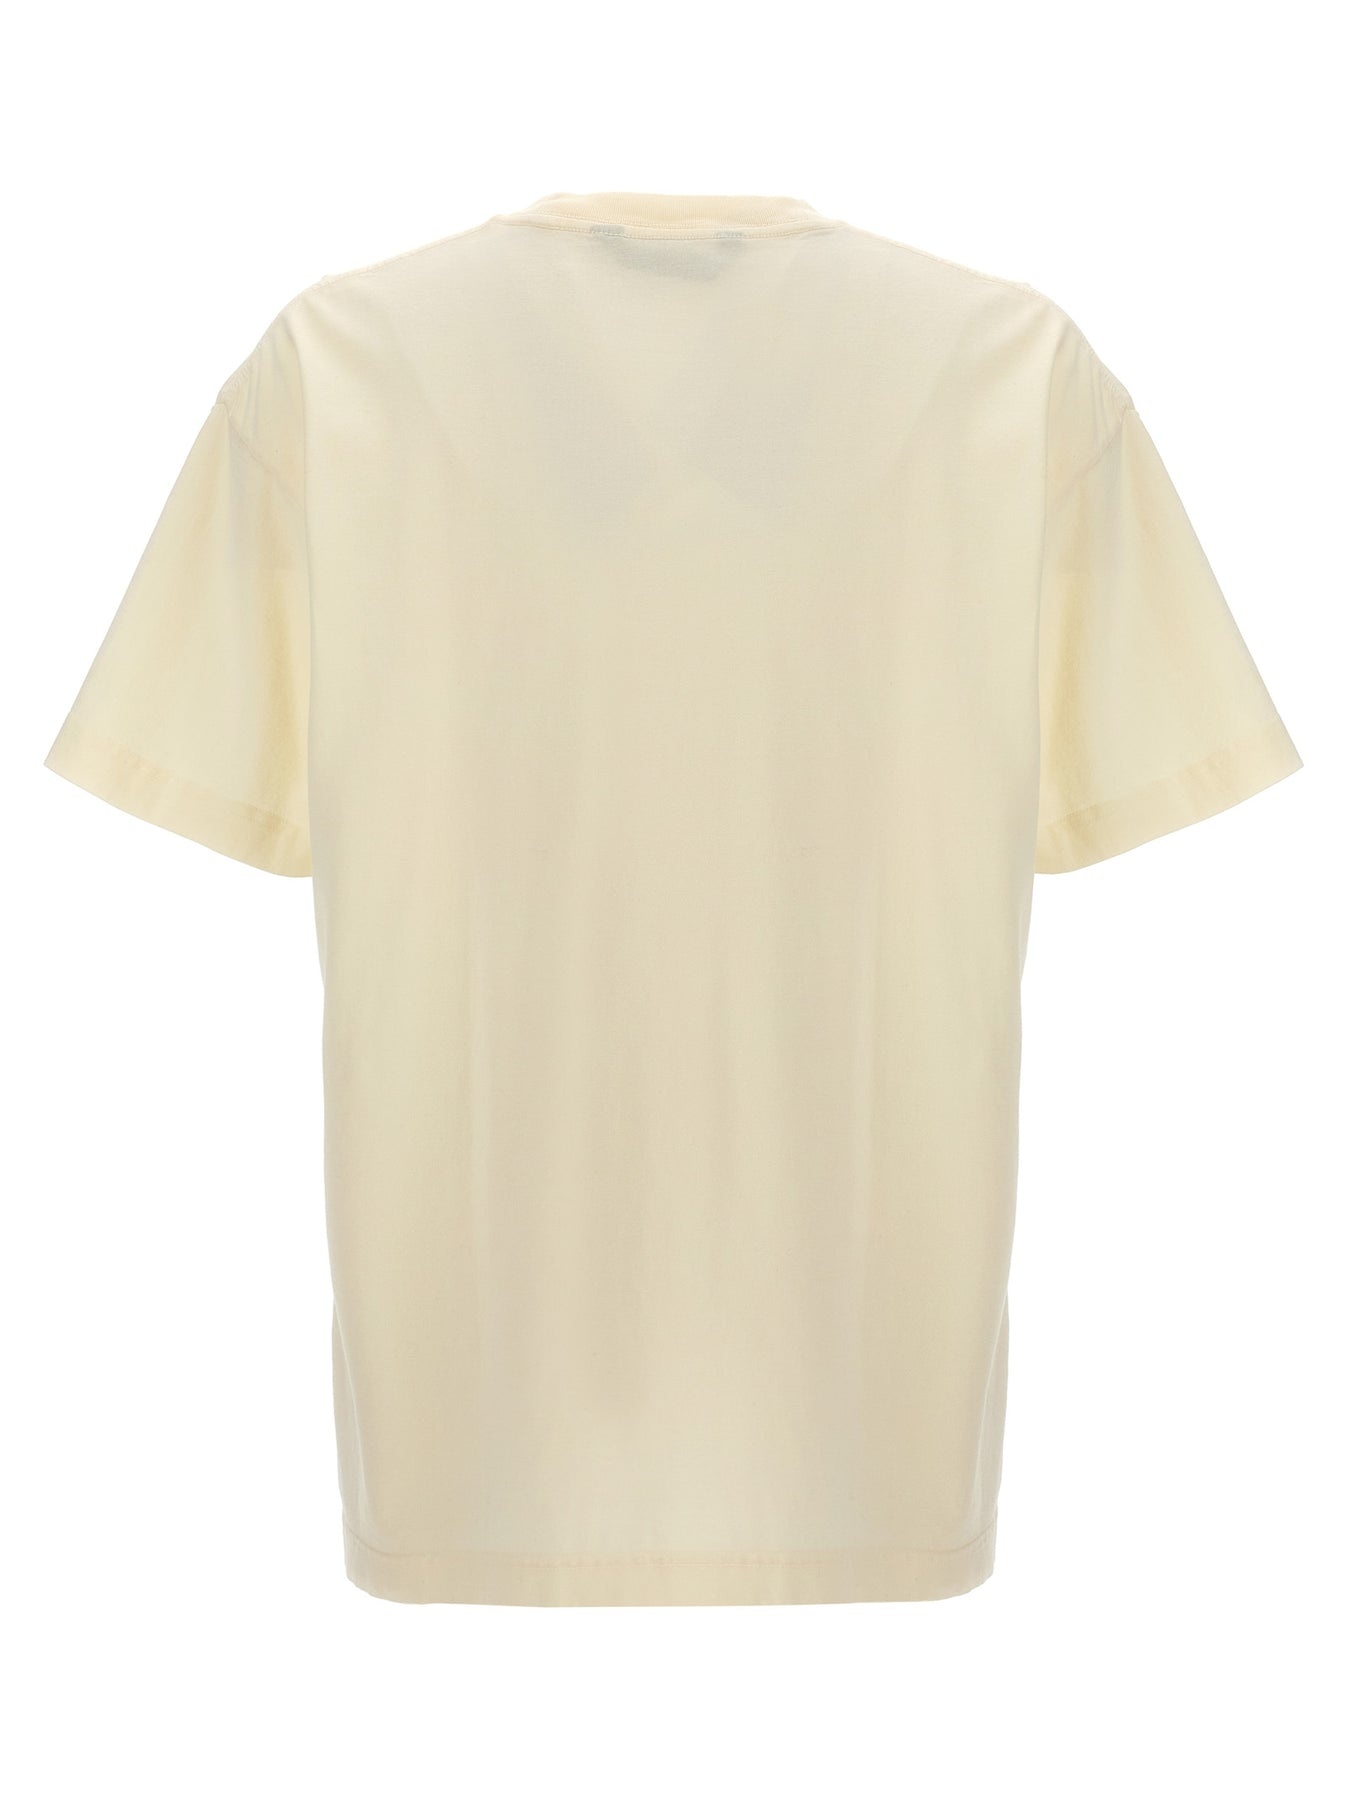 The Palm T-Shirt White/Black - 2